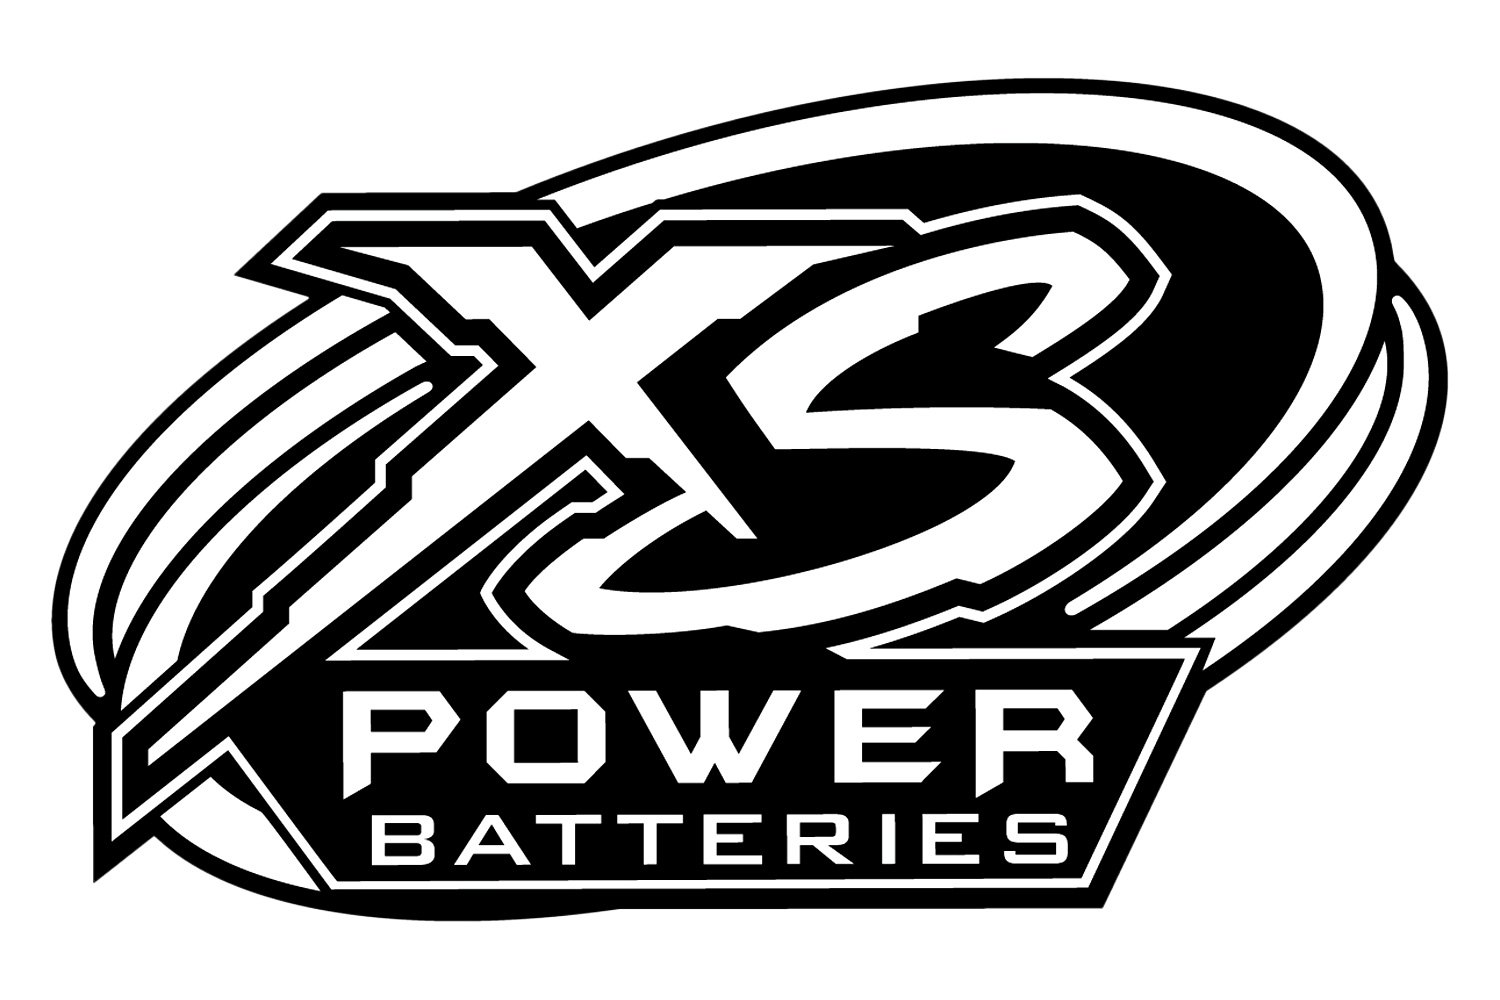 XS Power